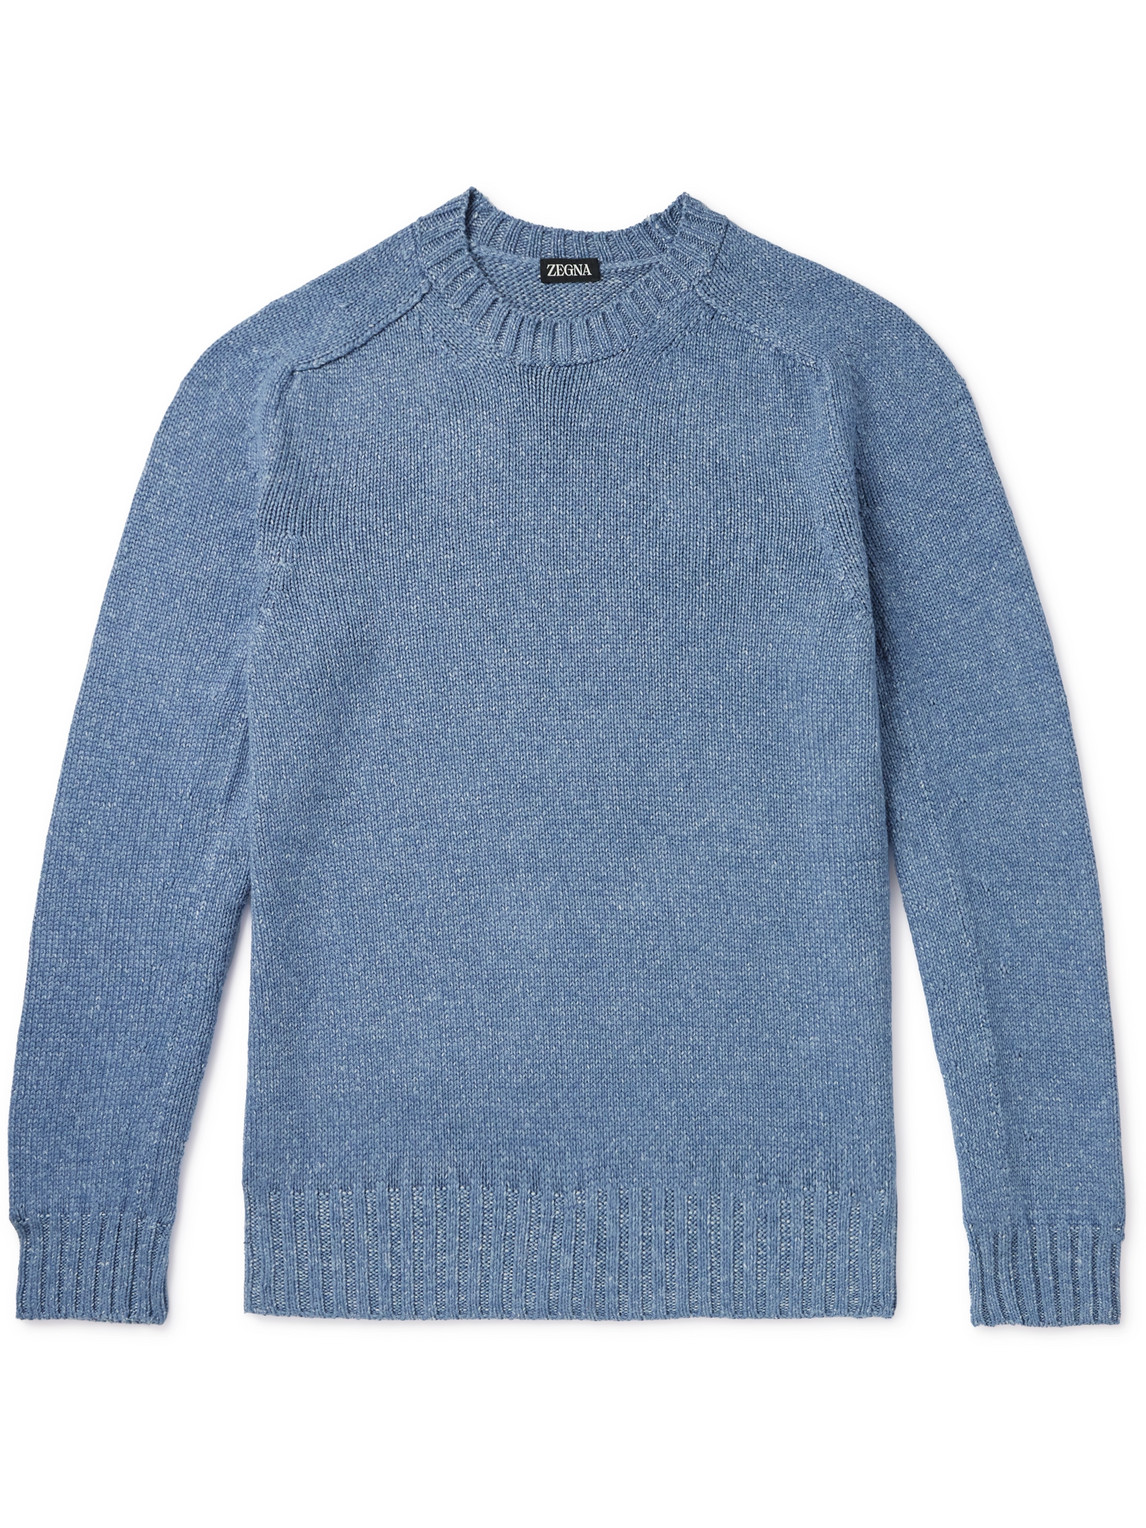 Zegna Cashmere And Silk-blend Sweater In Blue